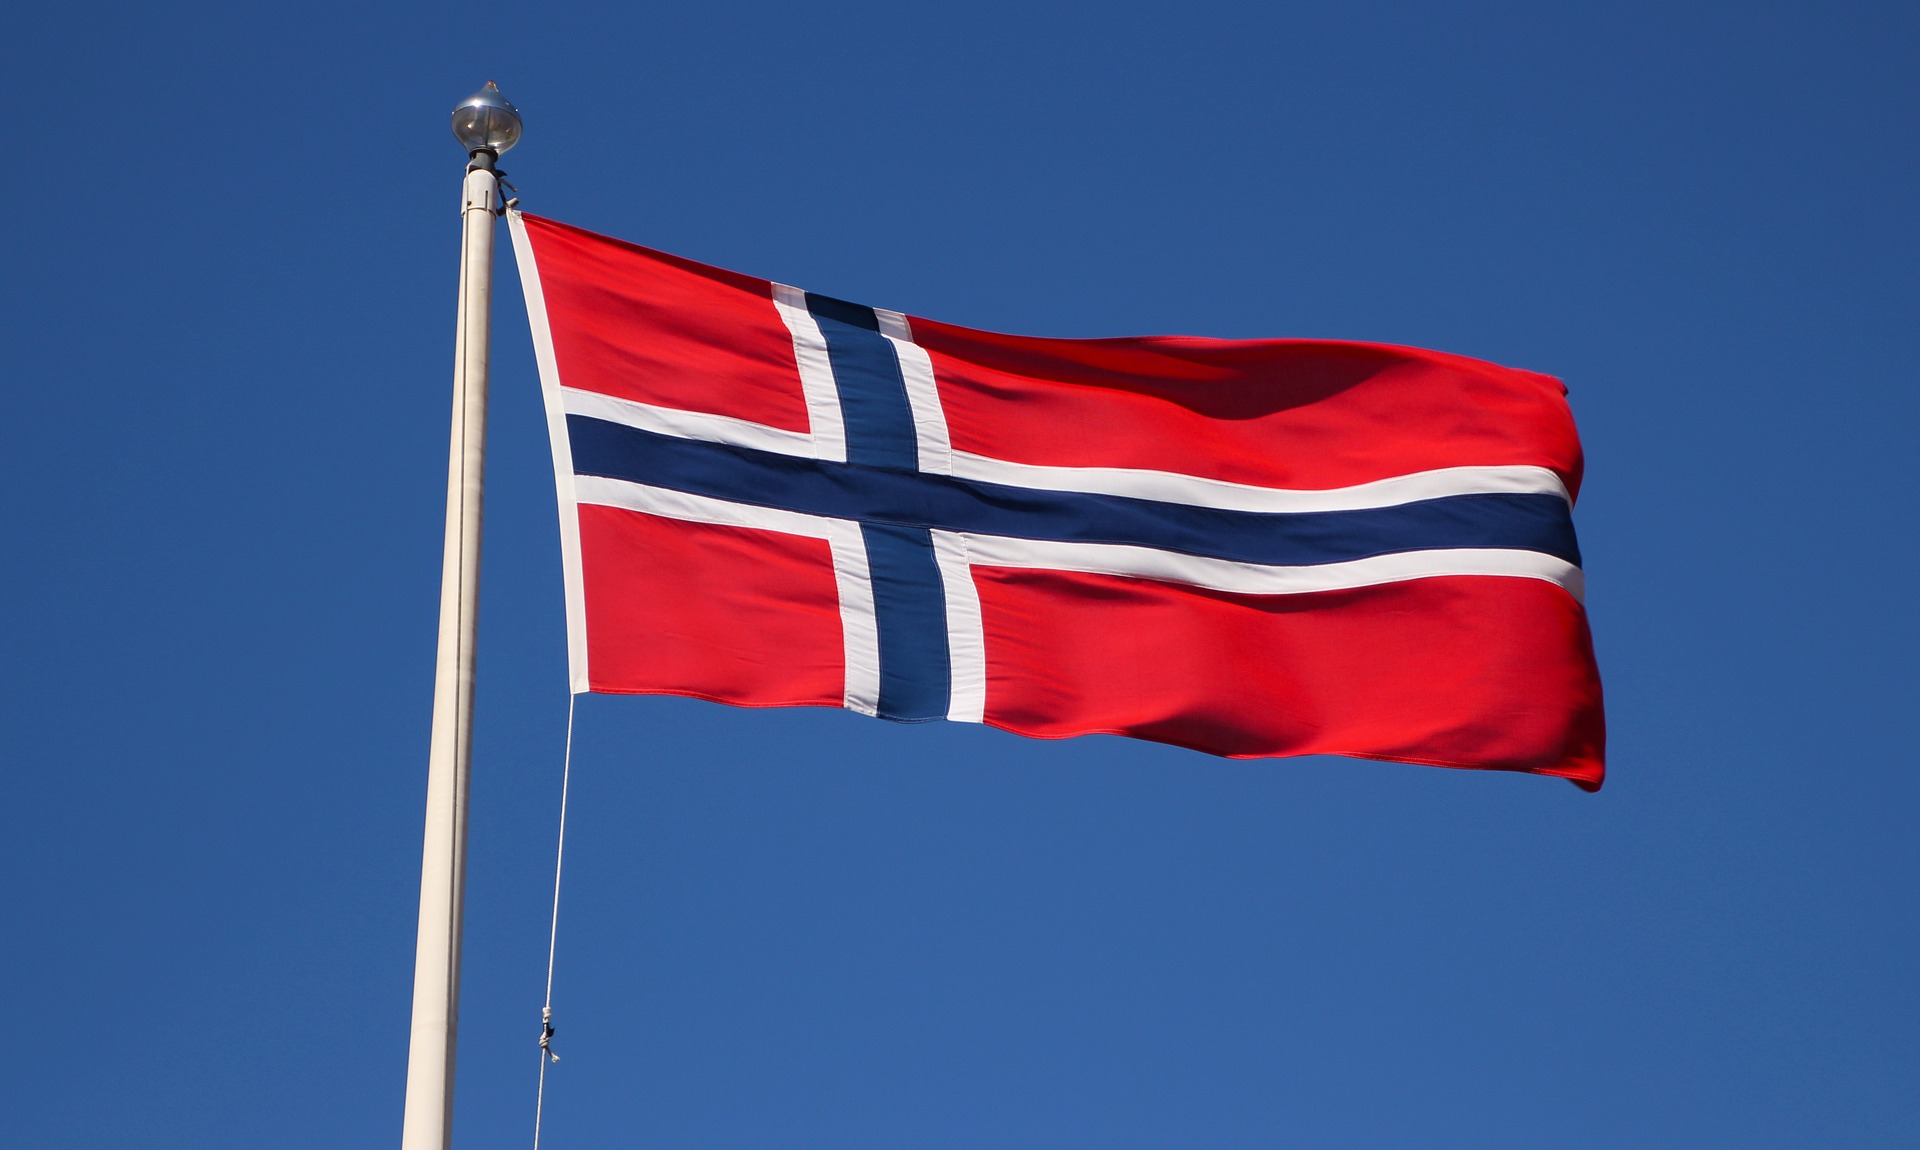 Norwegian Municipalities lead the way in Digital Transformation